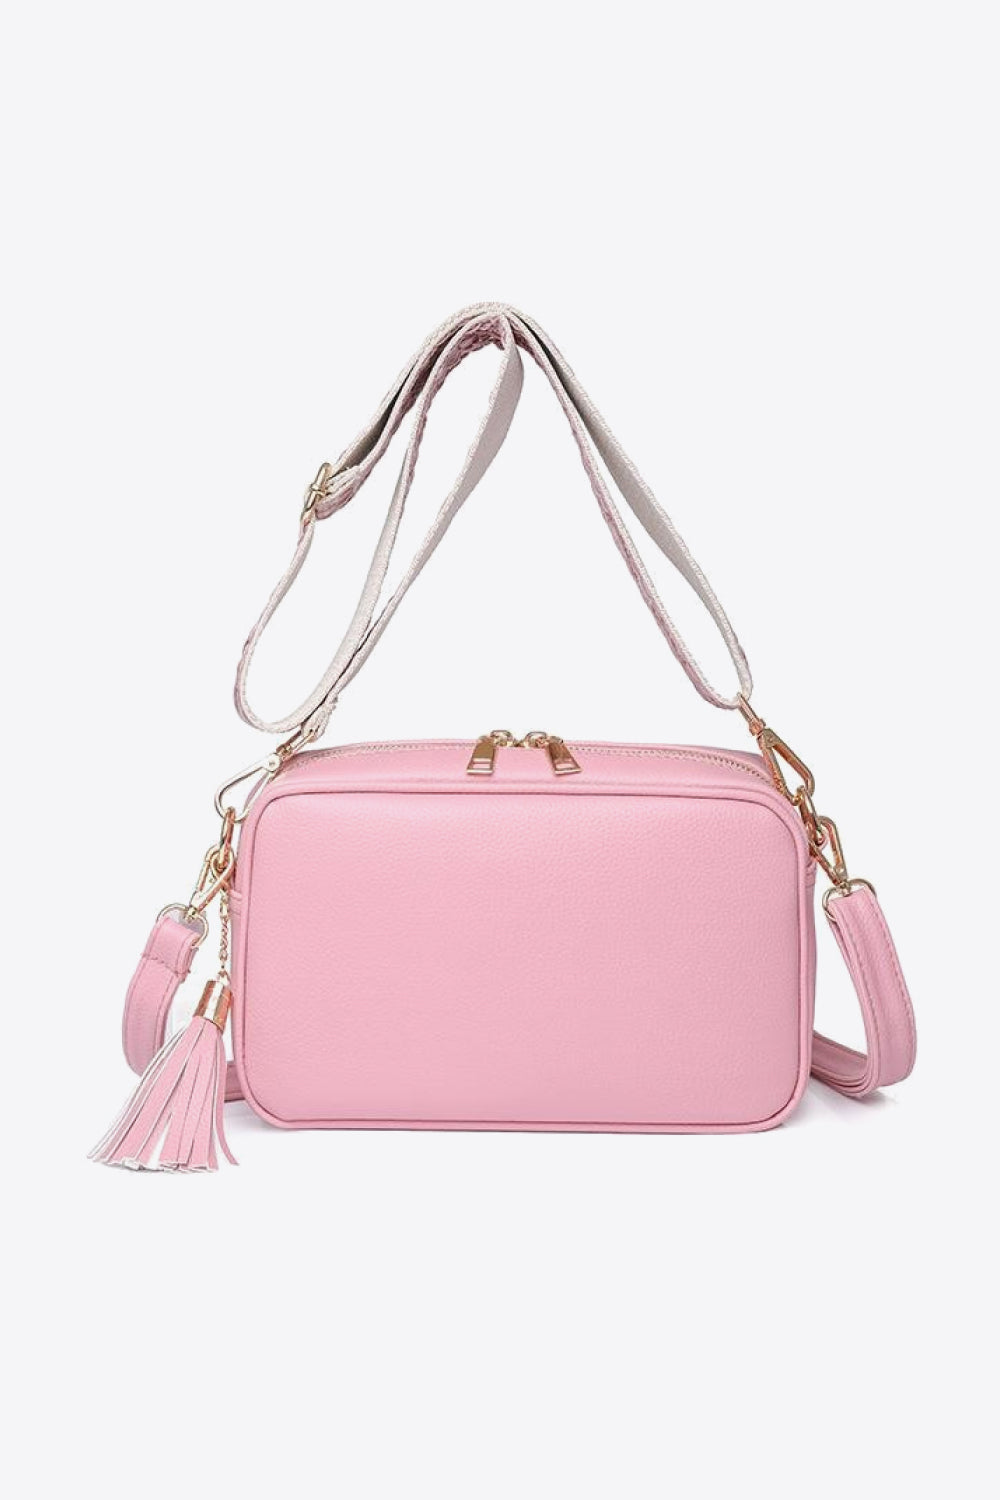 PU Leather Tassel Crossbody Bag in Pink.